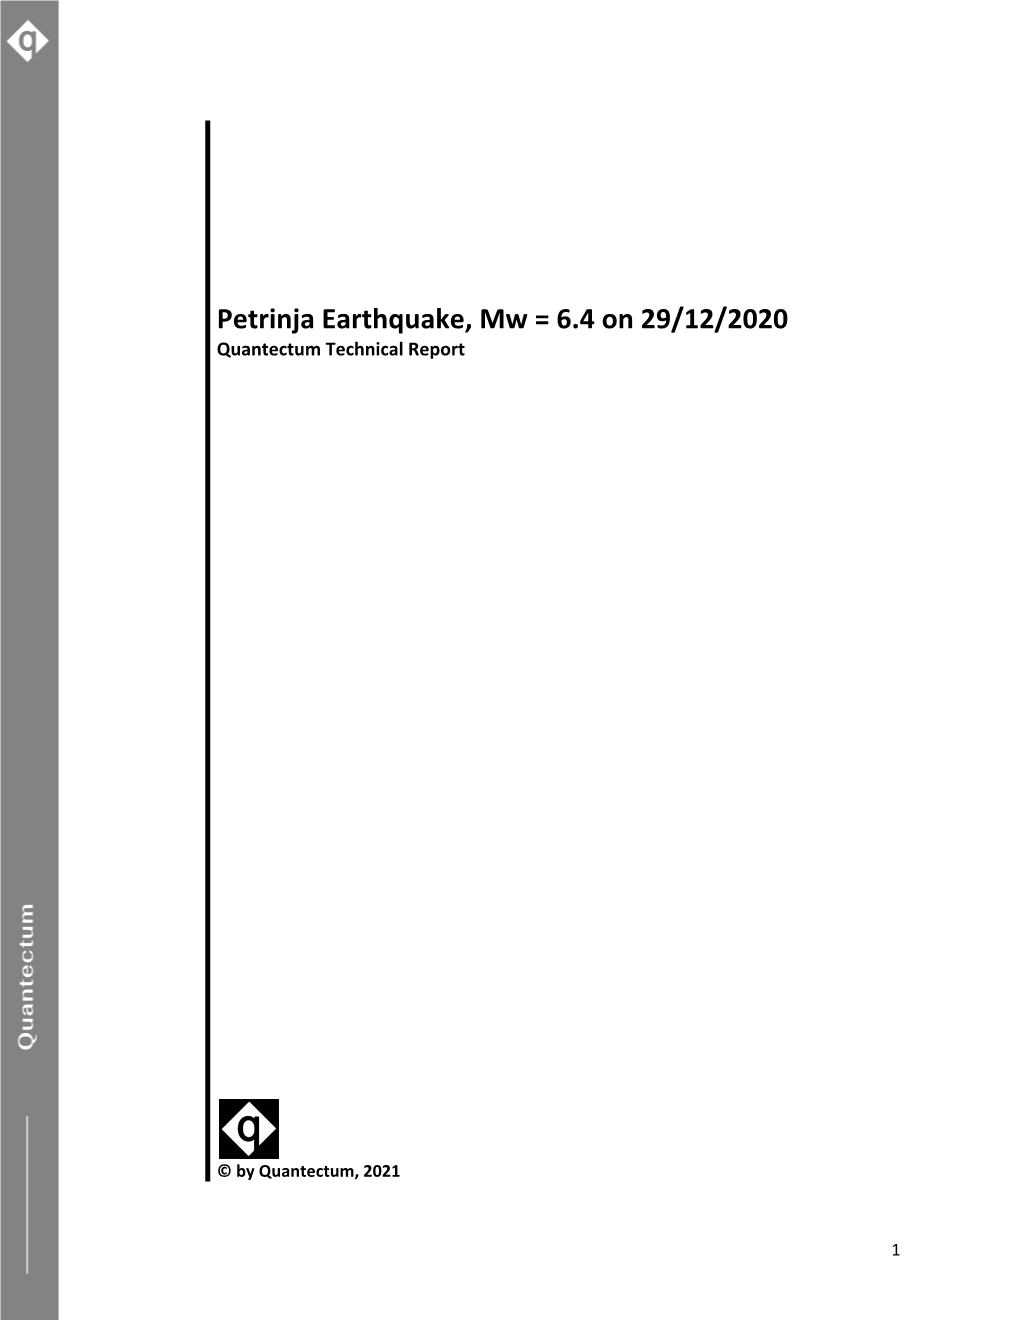 Petrinja Earthquake, Mw = 6.4 on 29/12/2020 Quantectum Technical Report